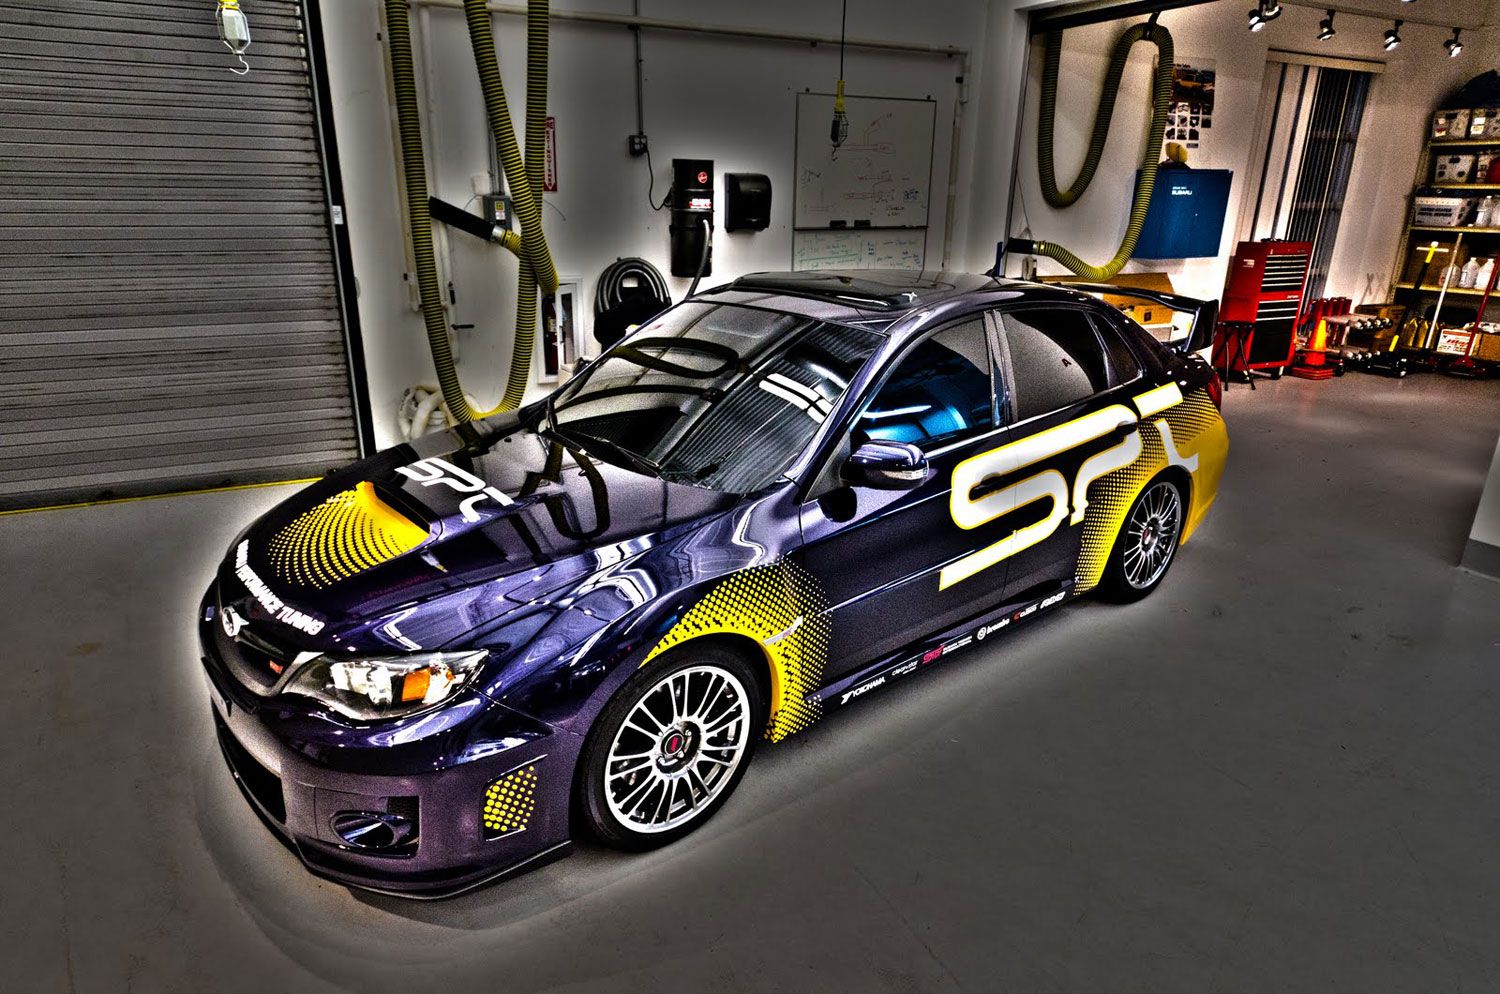 2011 Subaru WRX STI 4-door by Subaru Performance Tuning